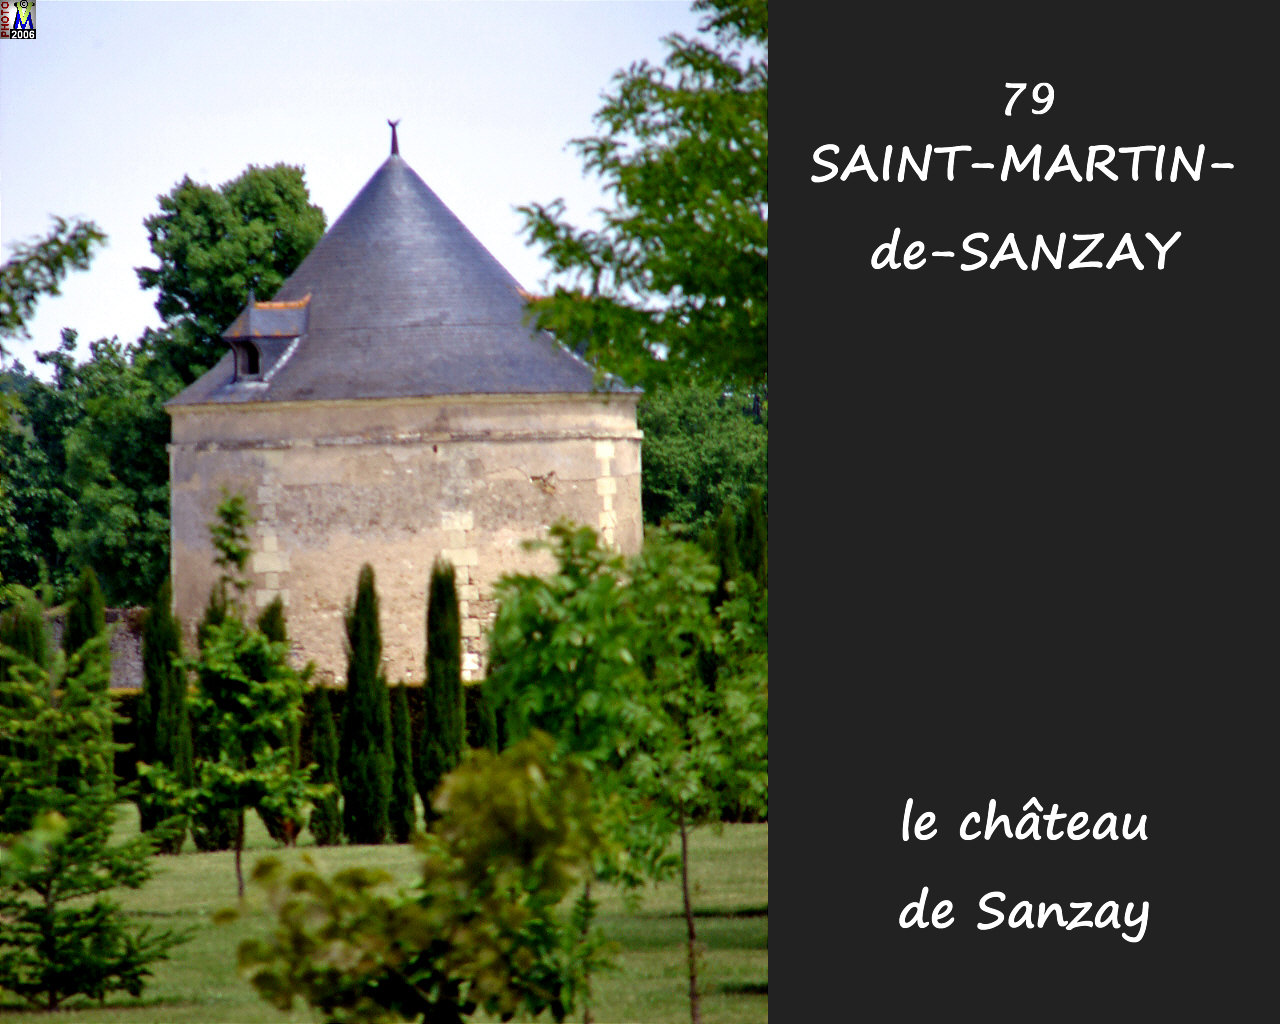 79StMARTIN-SANZAY_chateau_150.jpg